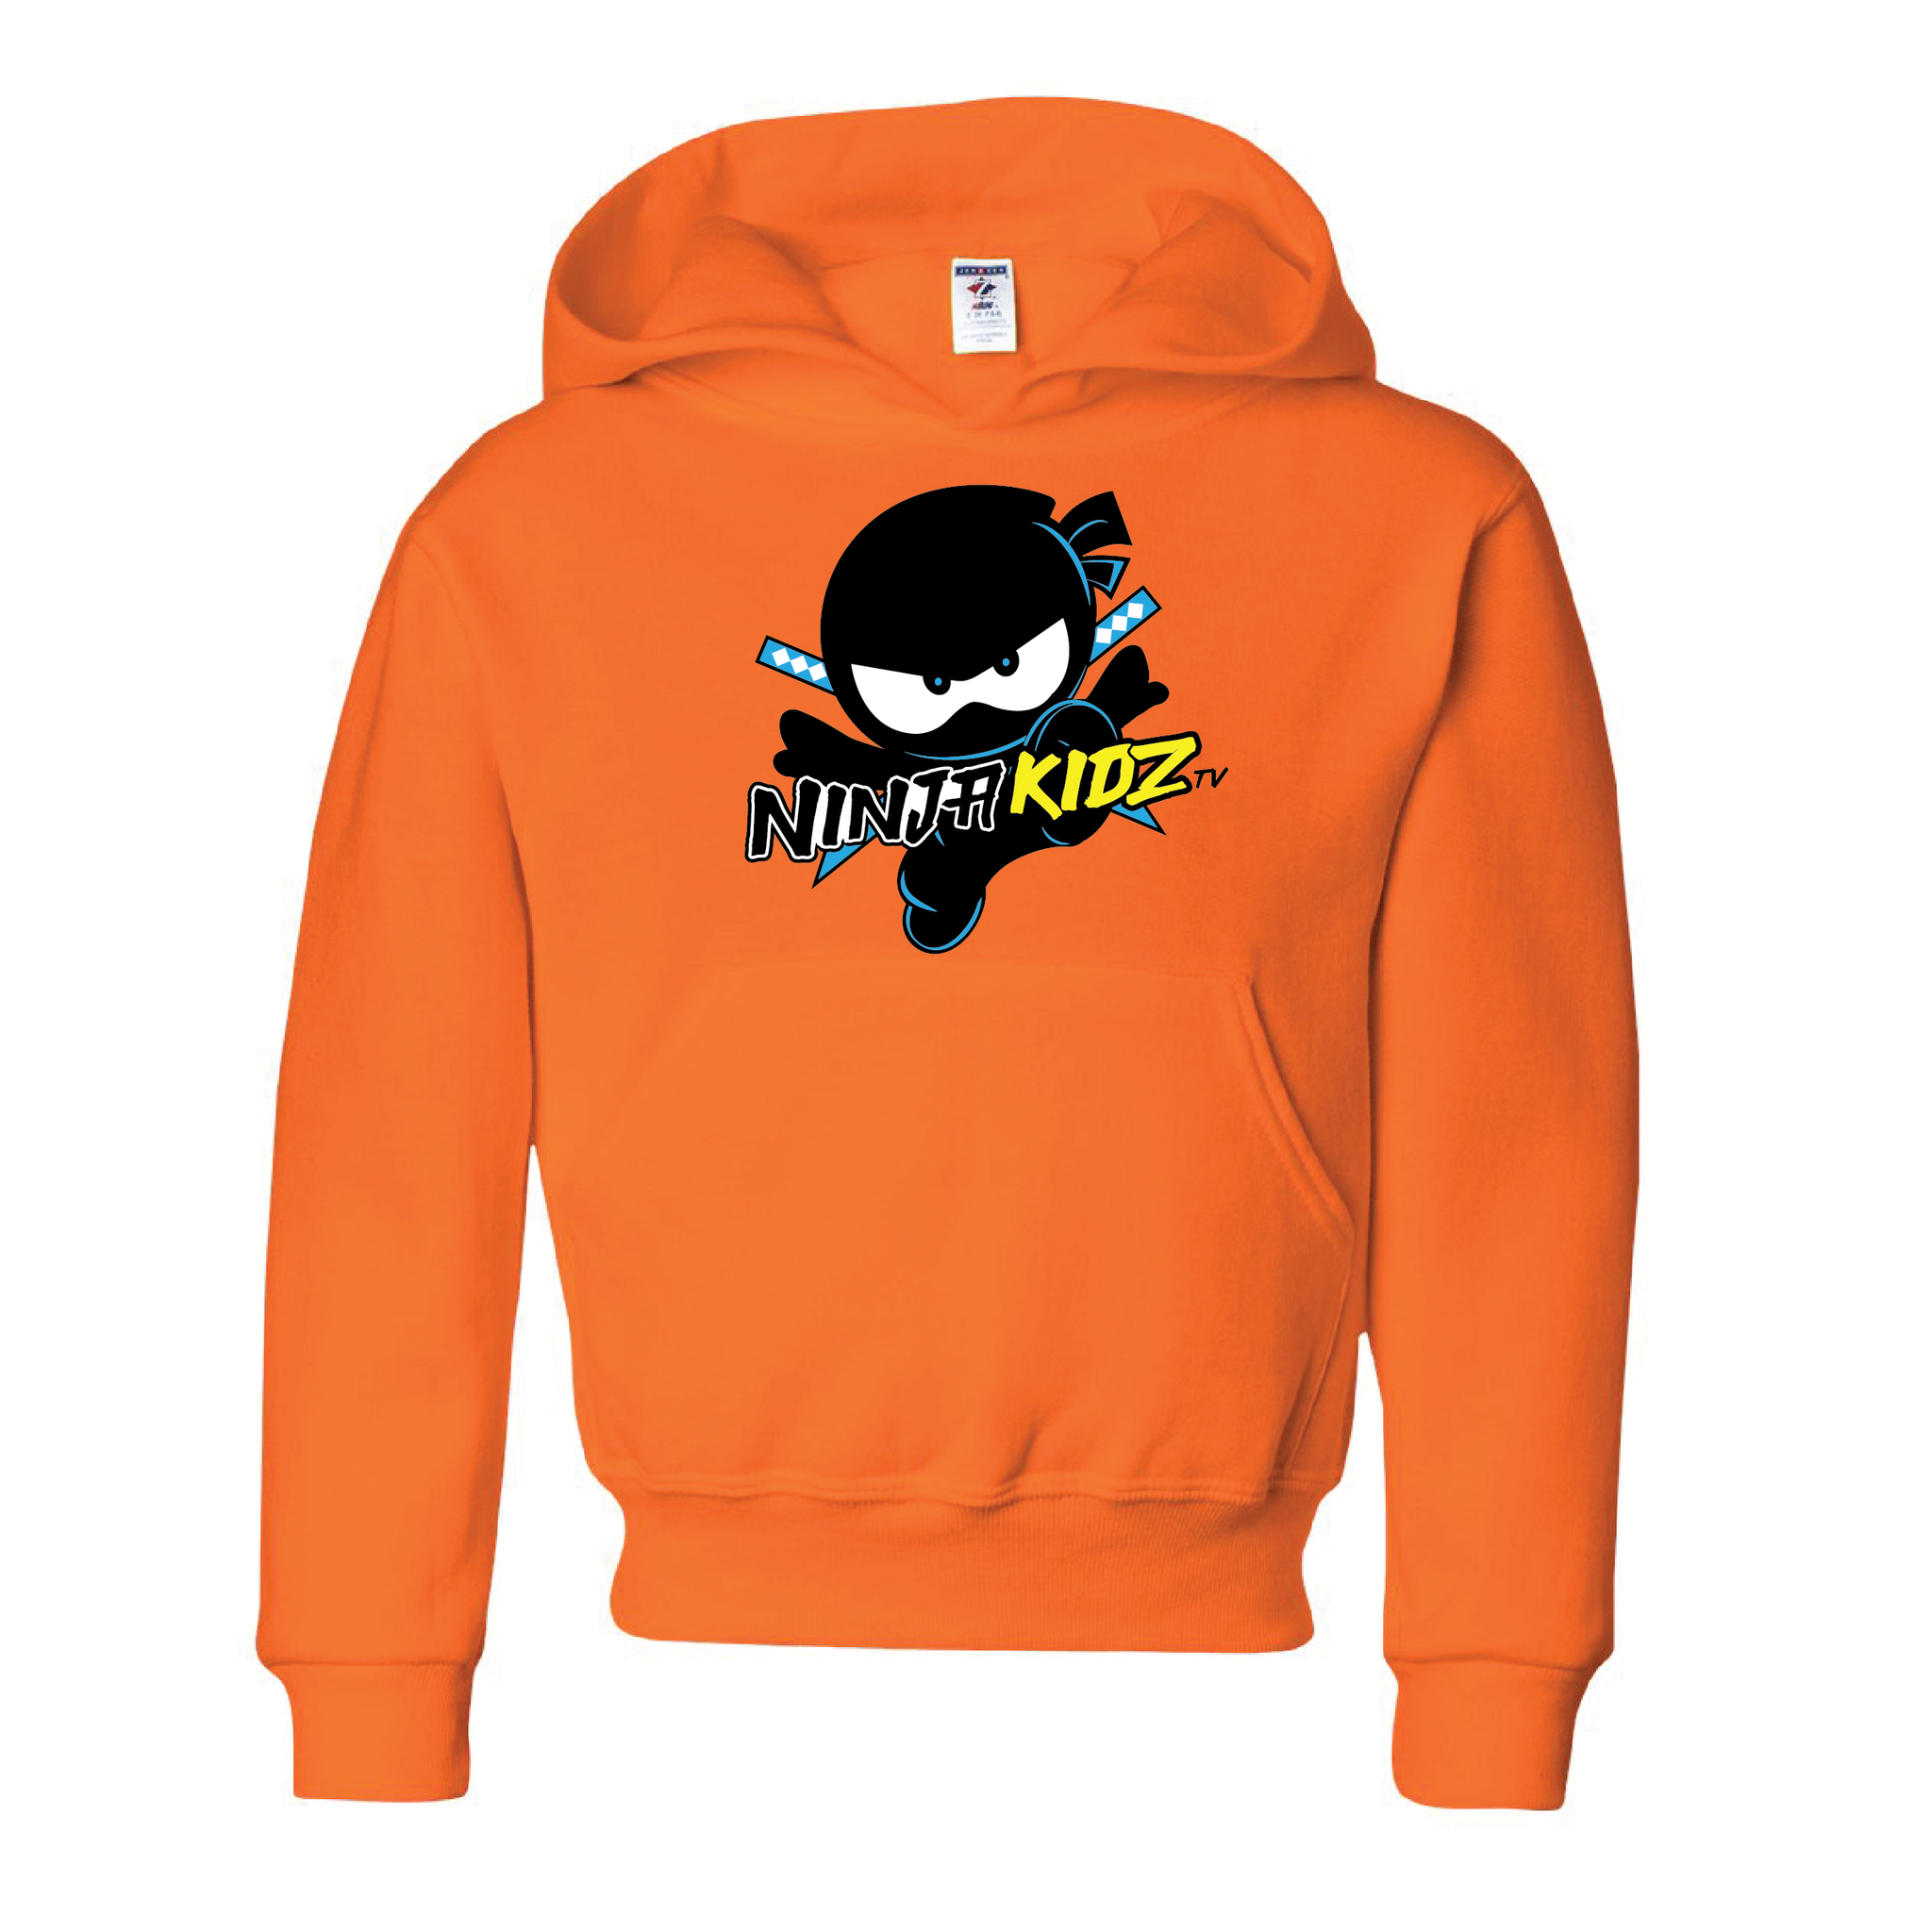 ninja kidz hoodie